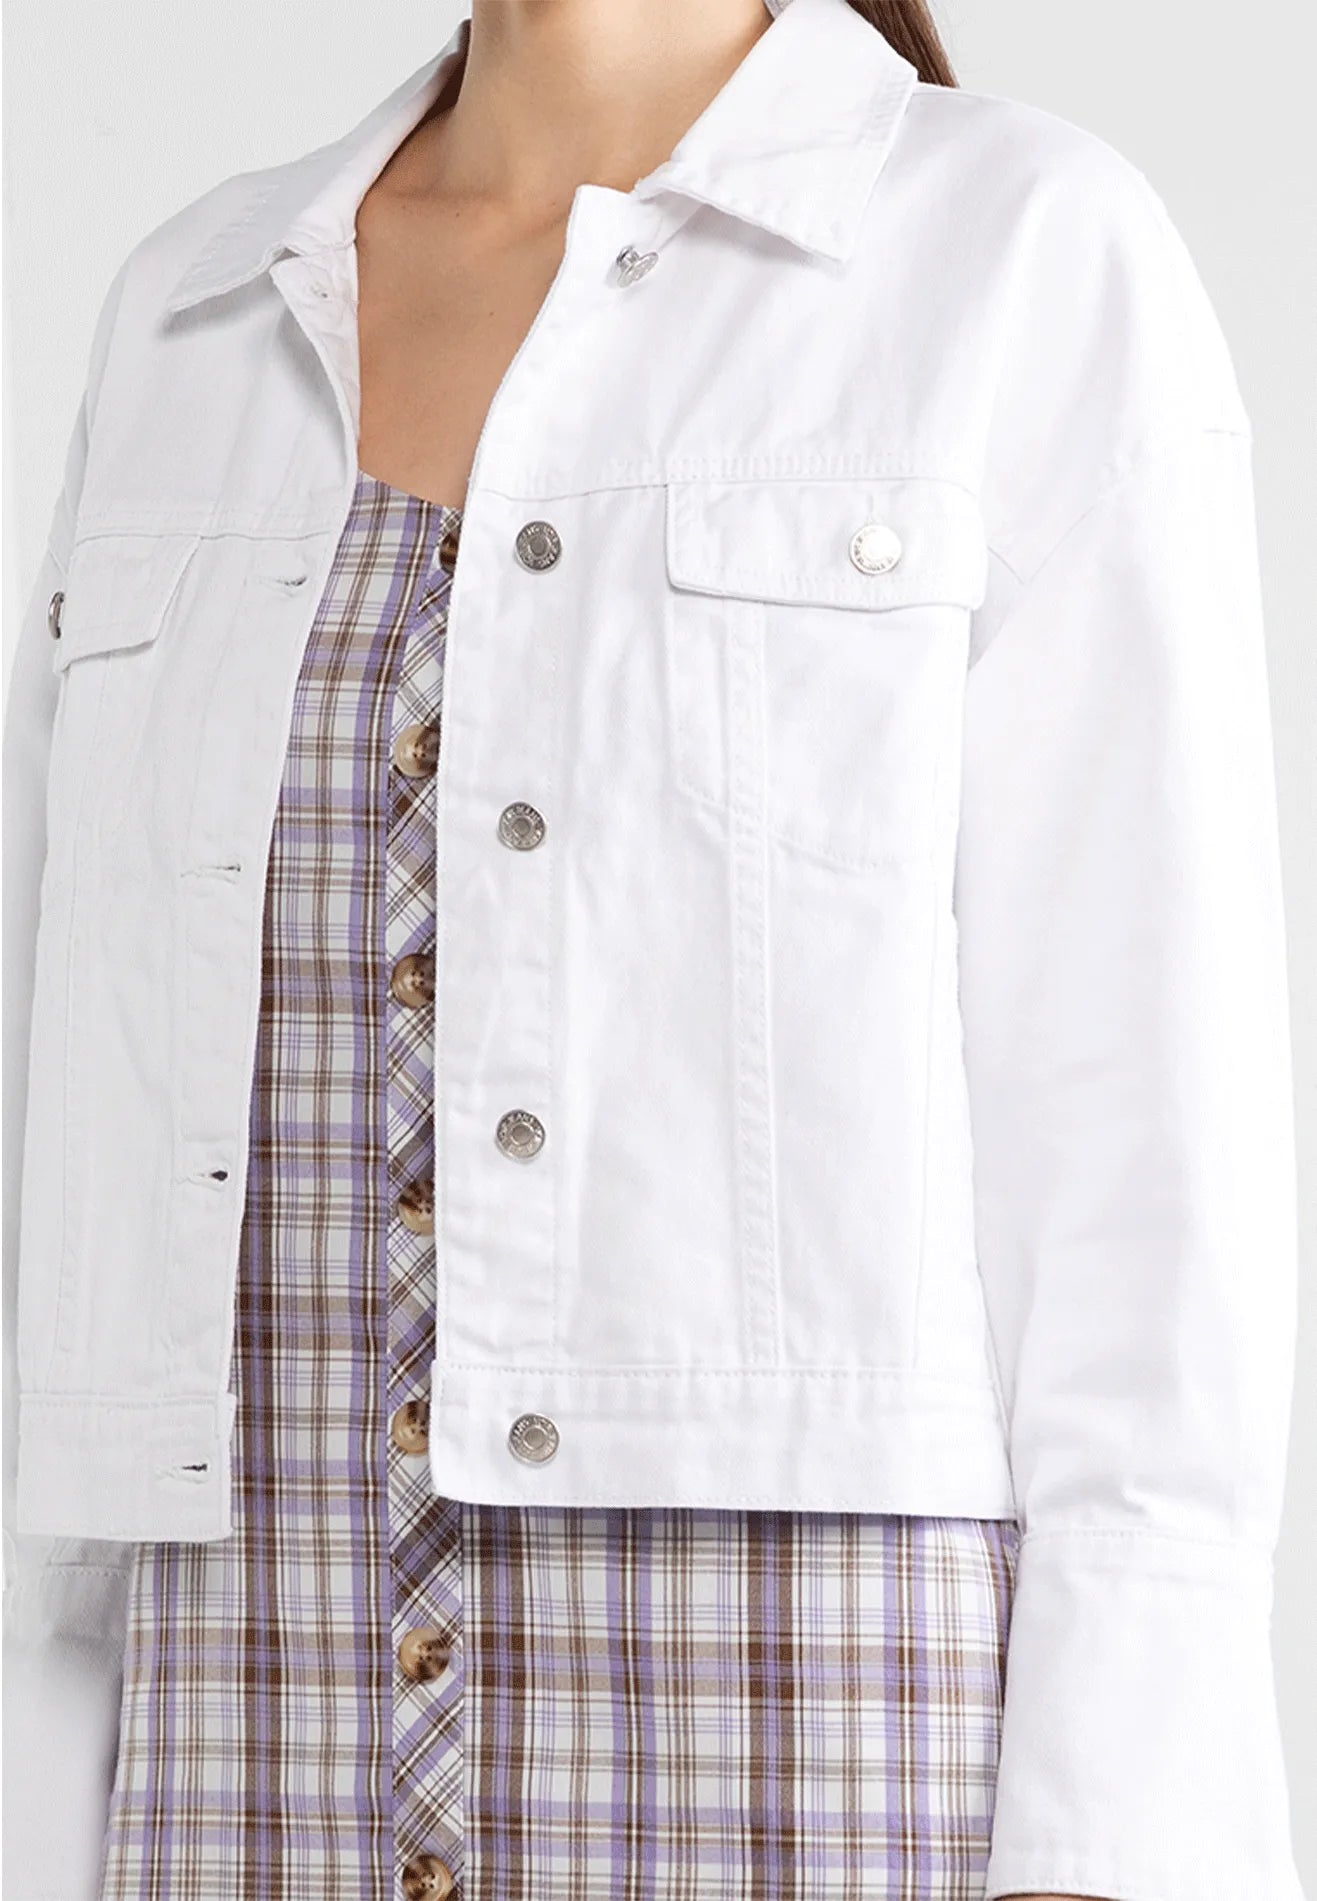 VOIR JEANS Hey Summer Collection: Front Pockets Collar Denim Jacket